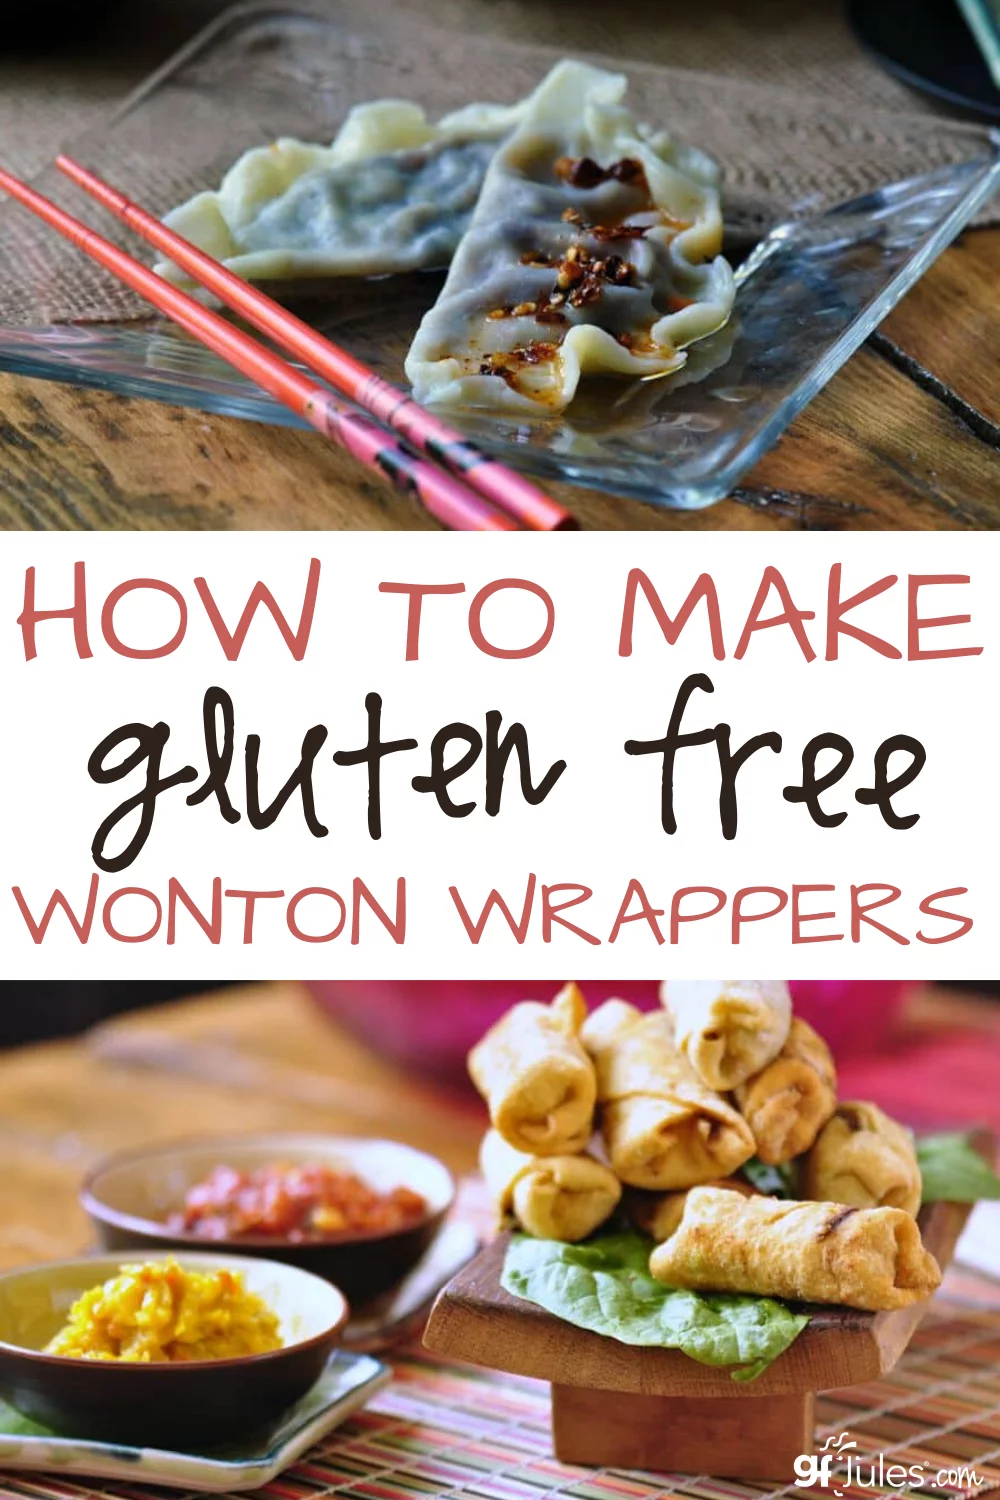 Gluten Free Wonton Wrapper Recipe